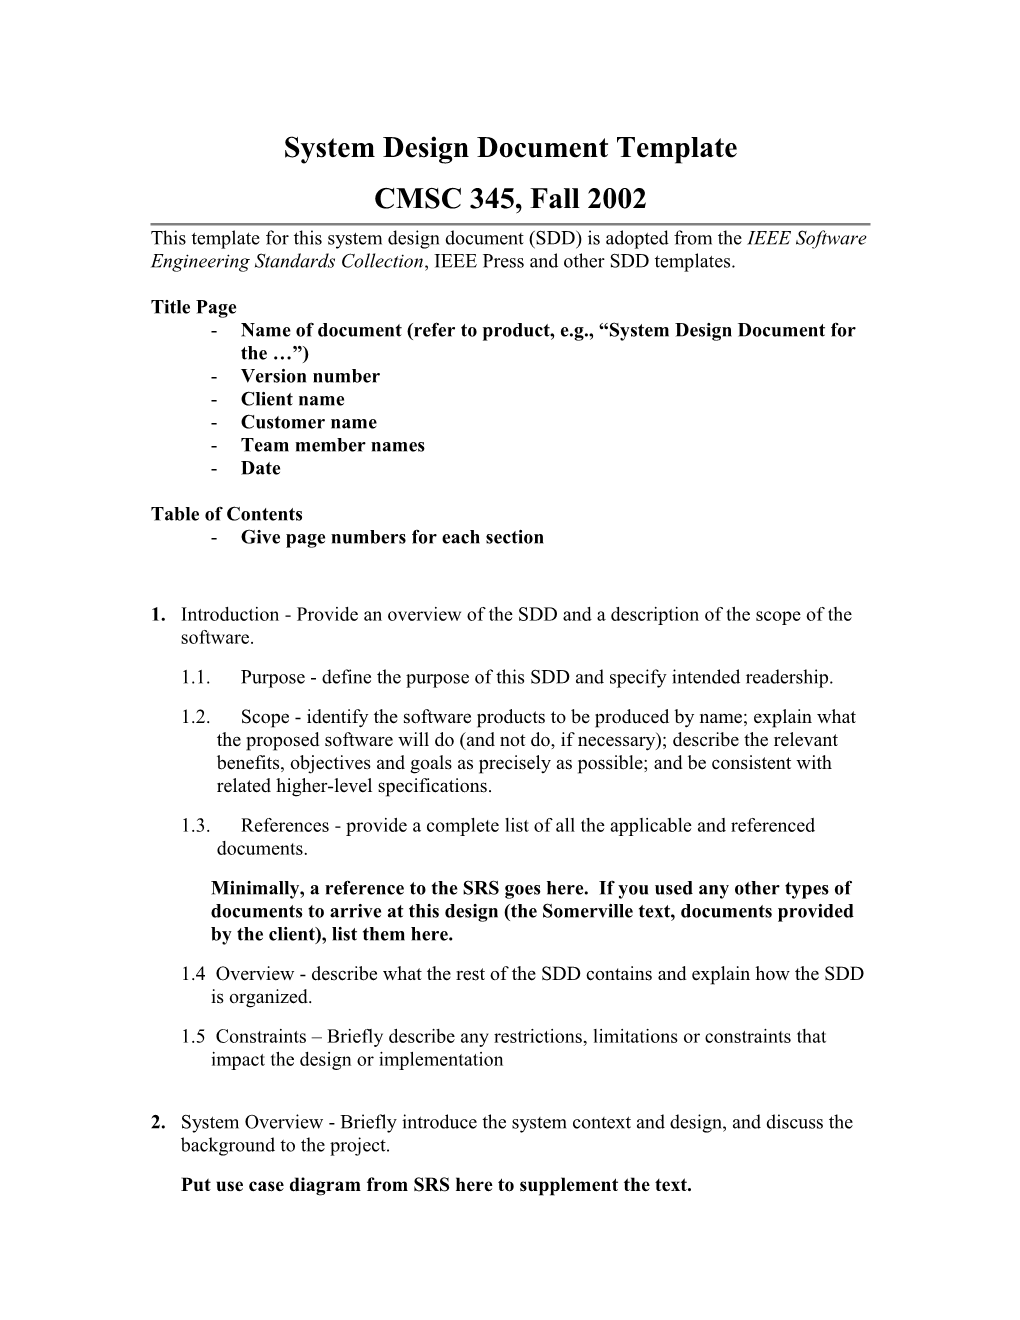 SDD Template, CMSC 345 Fall 2000 s3